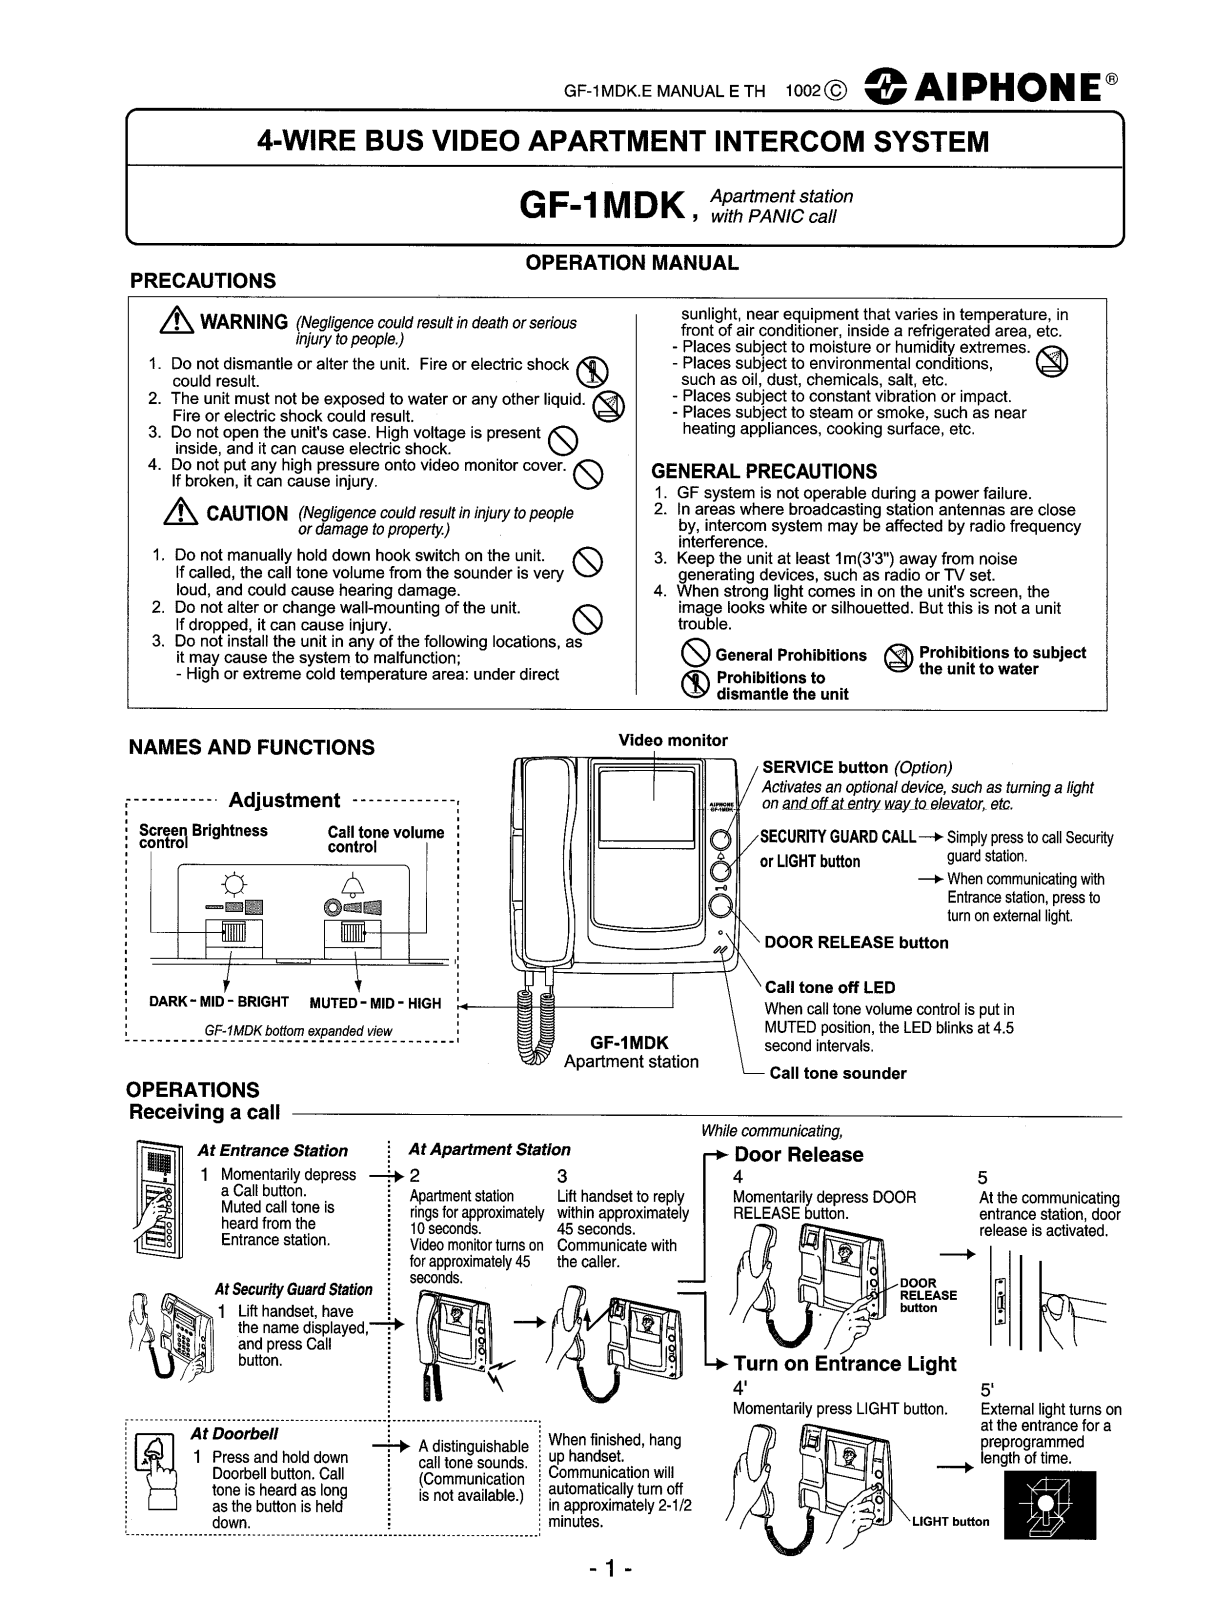 Aiphone GF-1MDK Operation Manual